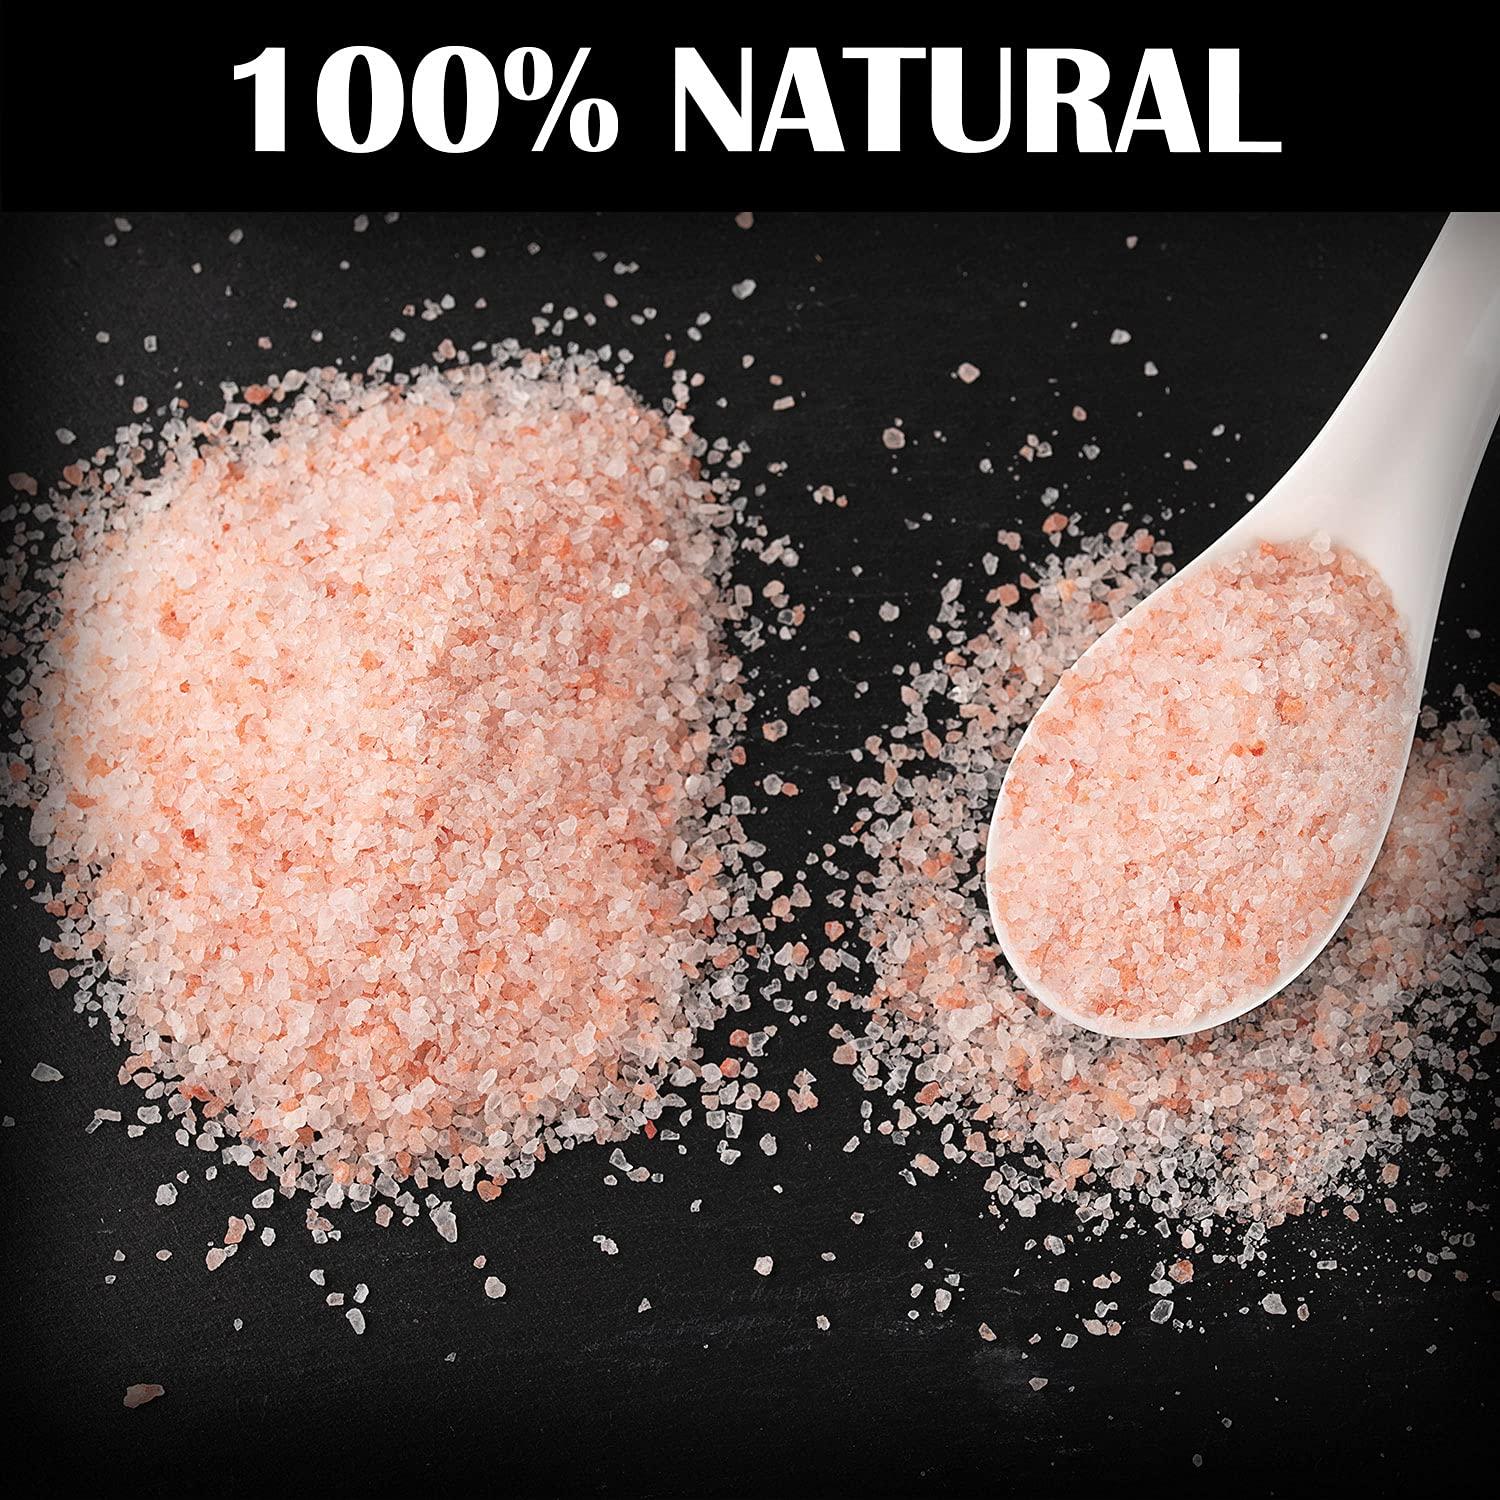 5 Amazing Health Benefits of Himalayan Pink Salt 